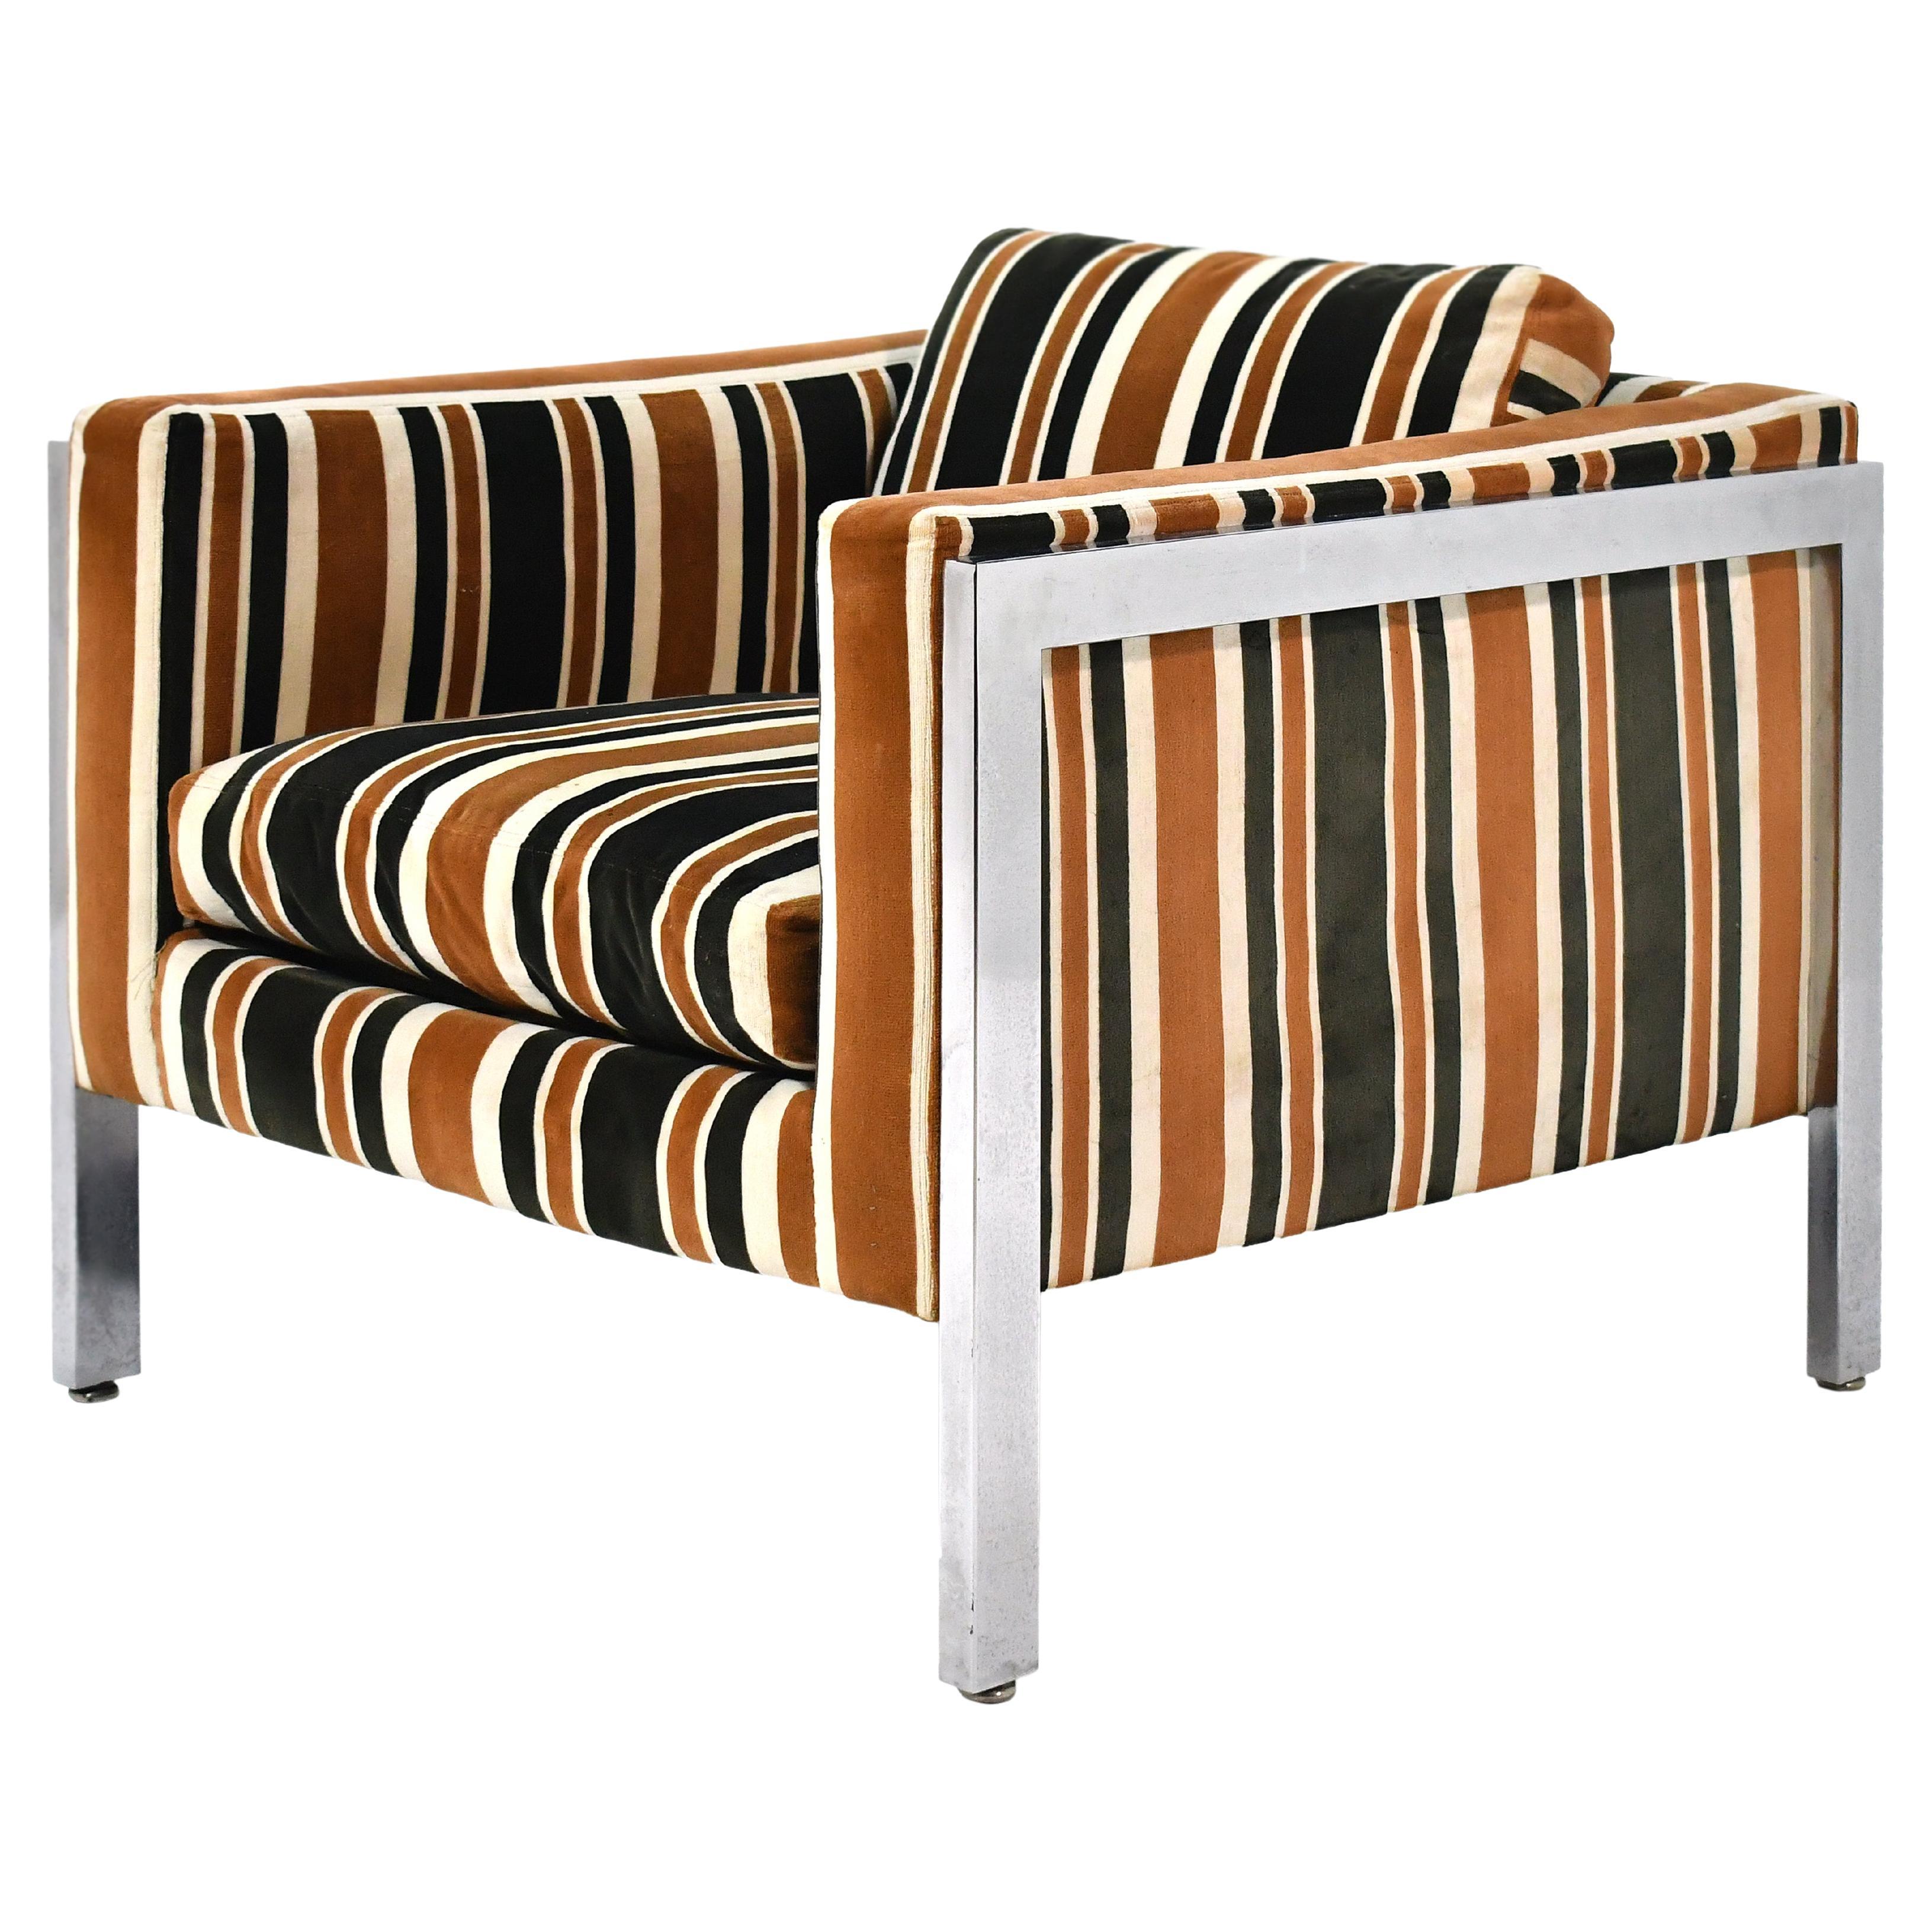 Milo Baughman Style Lounge Chair